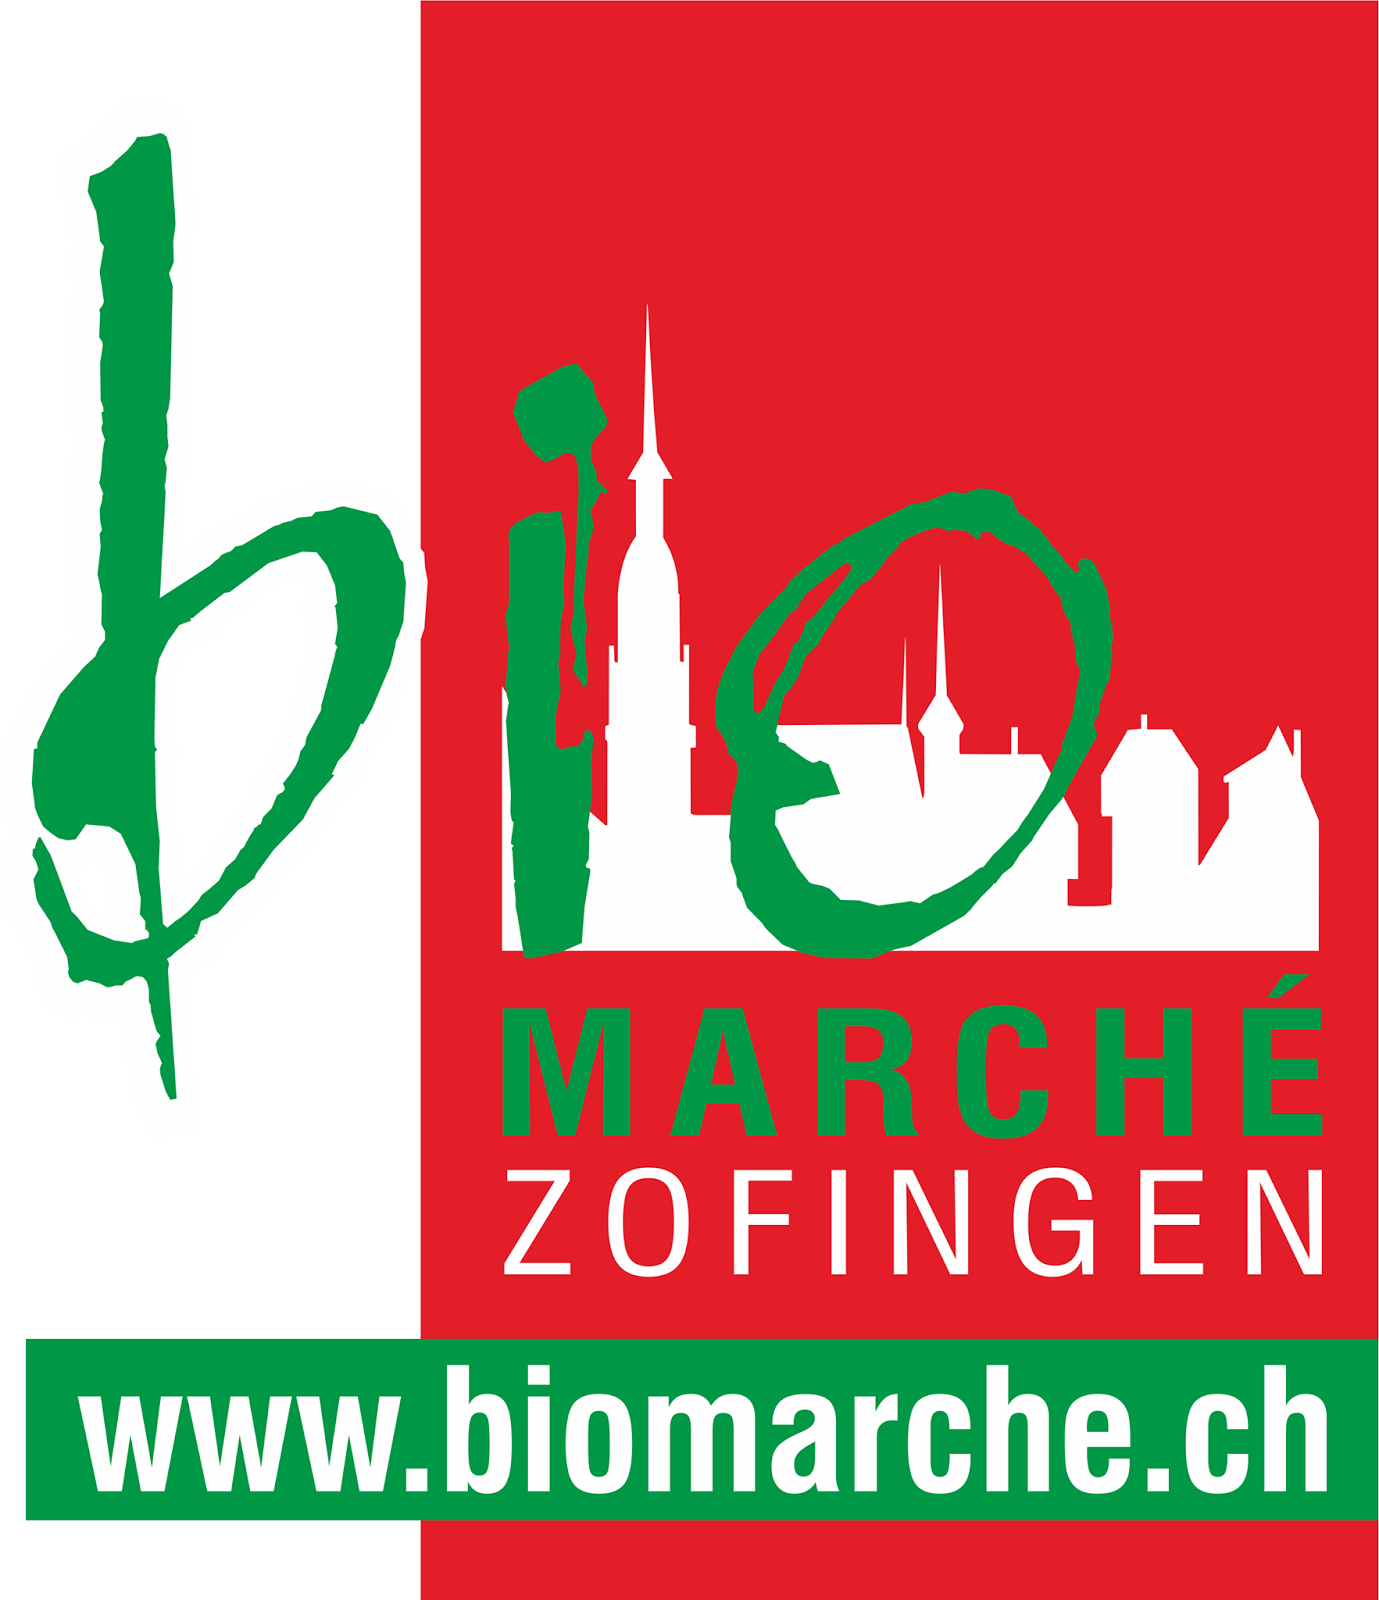 http://www.biomarche.ch